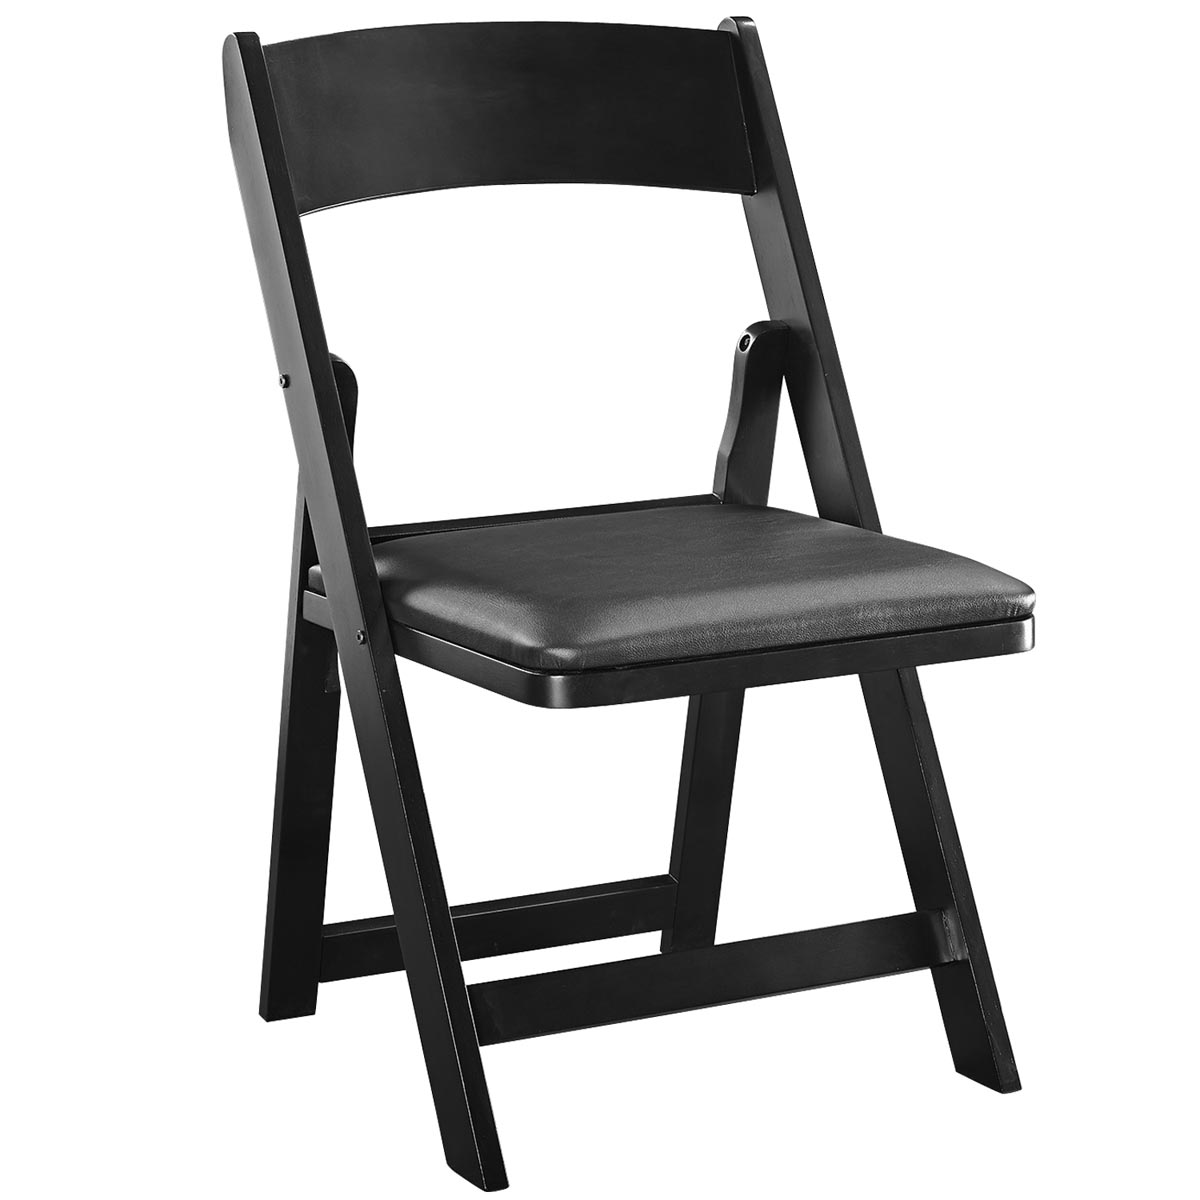 Optional Black Folding Chair